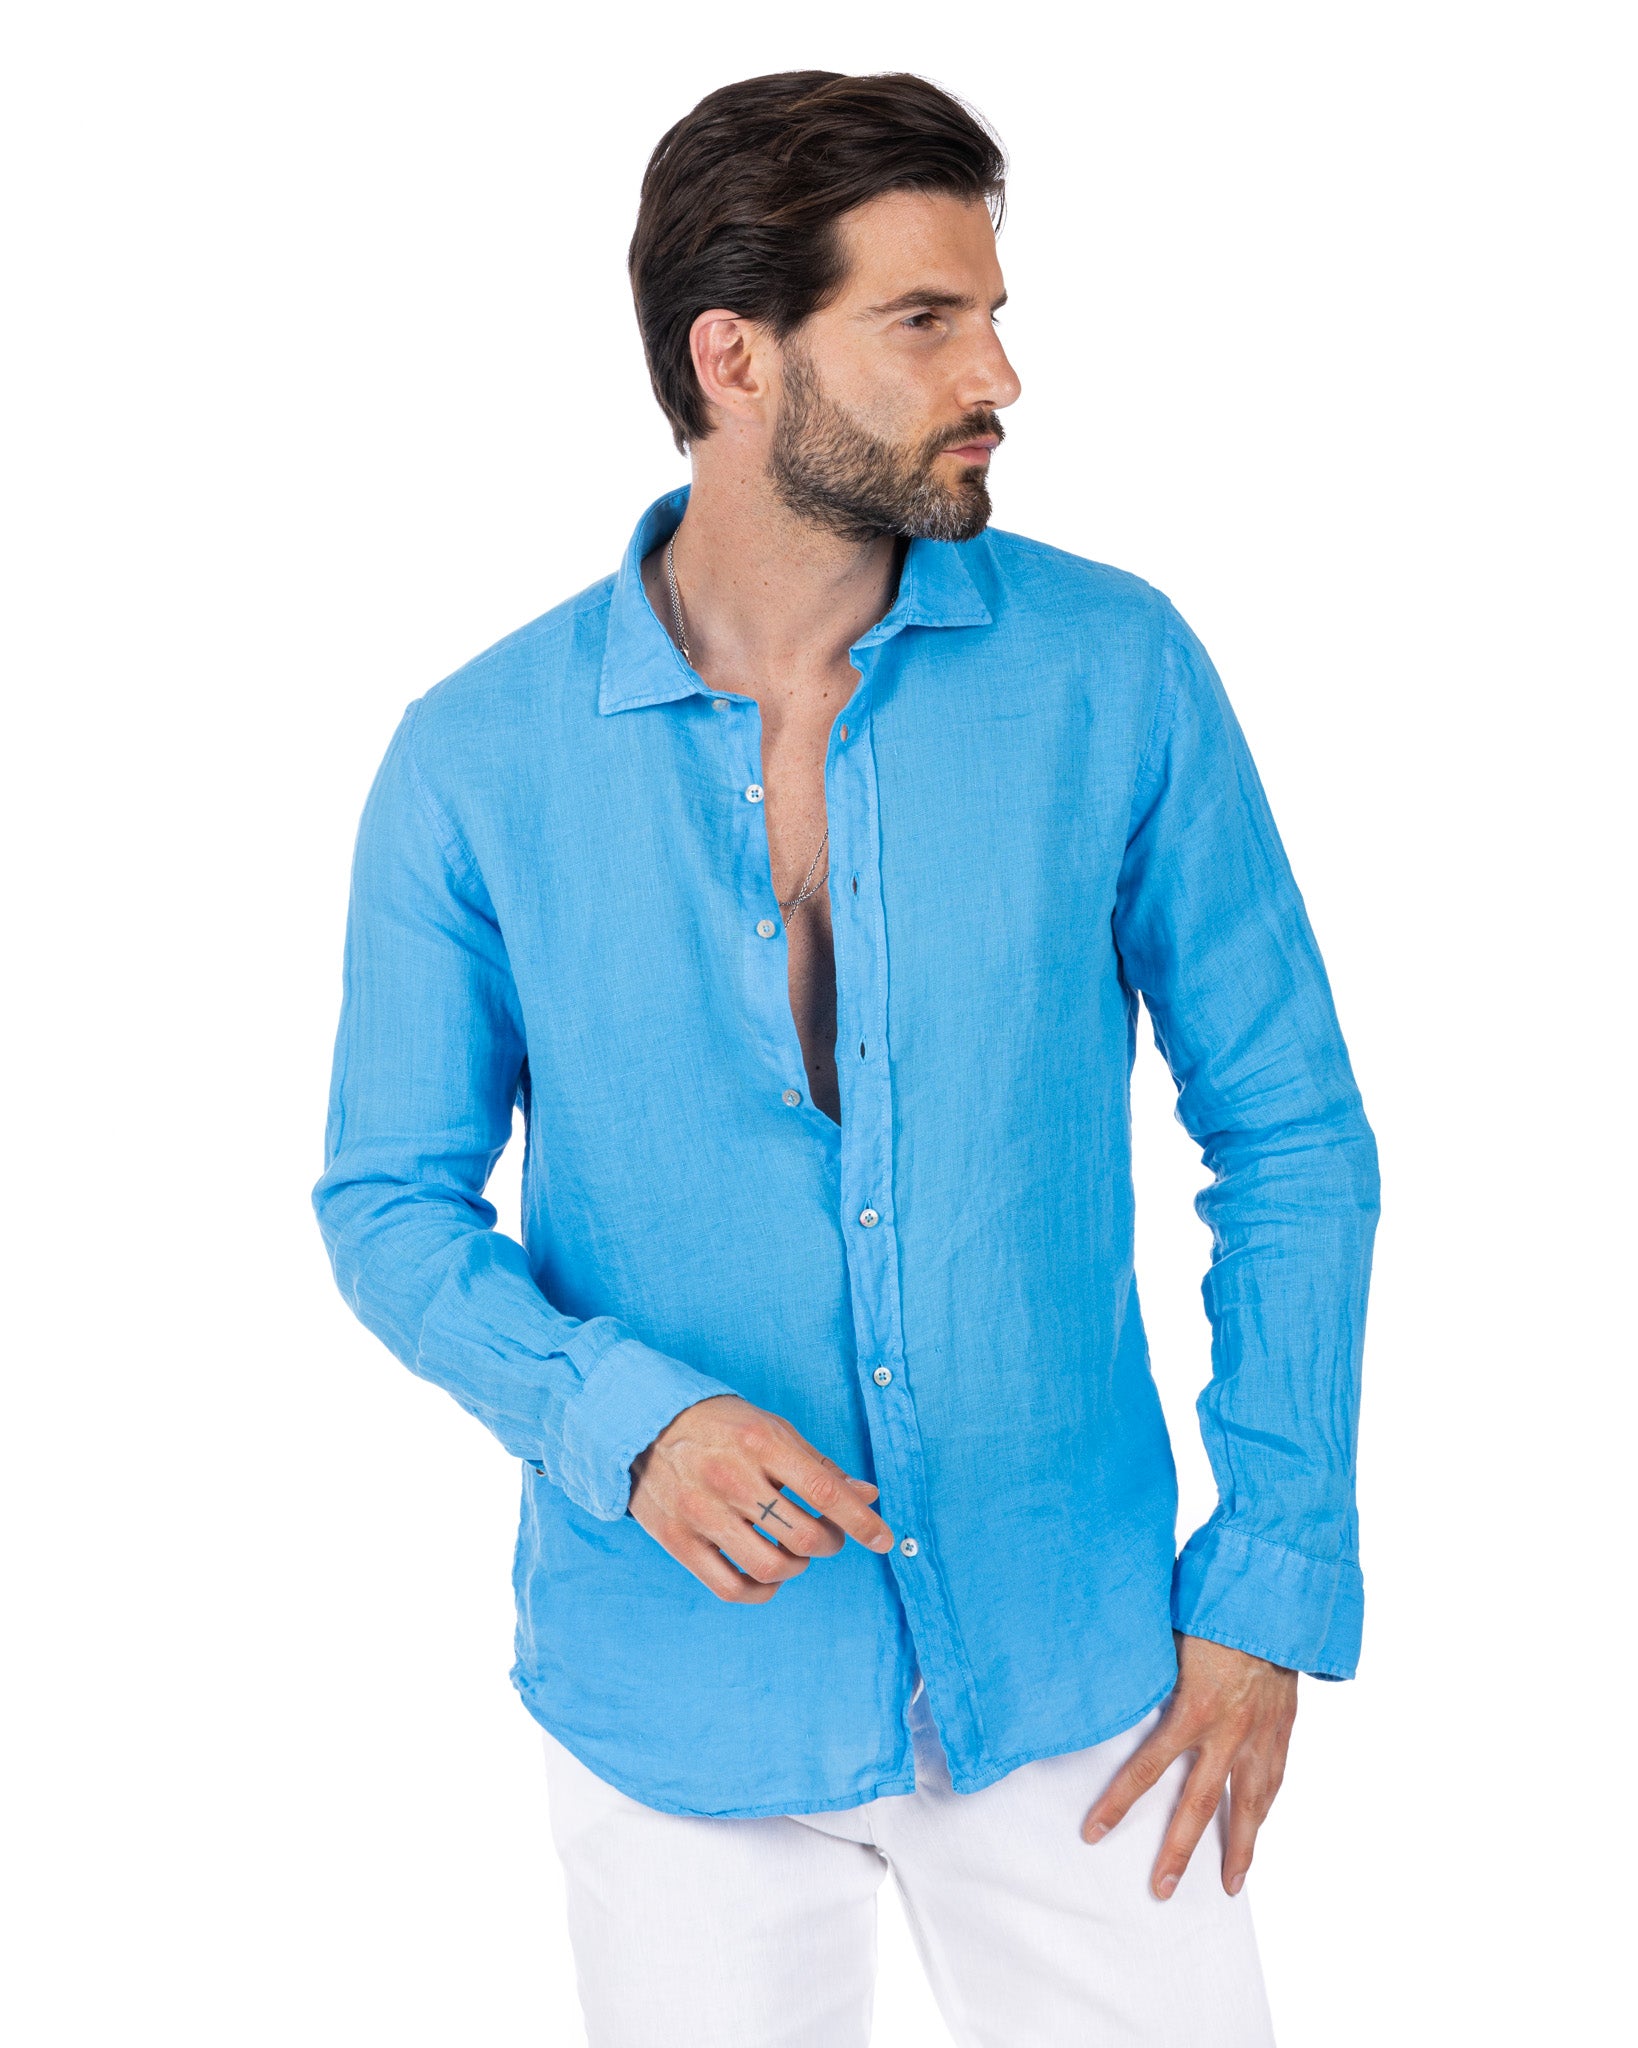 Montecarlo - turquoise pure linen shirt